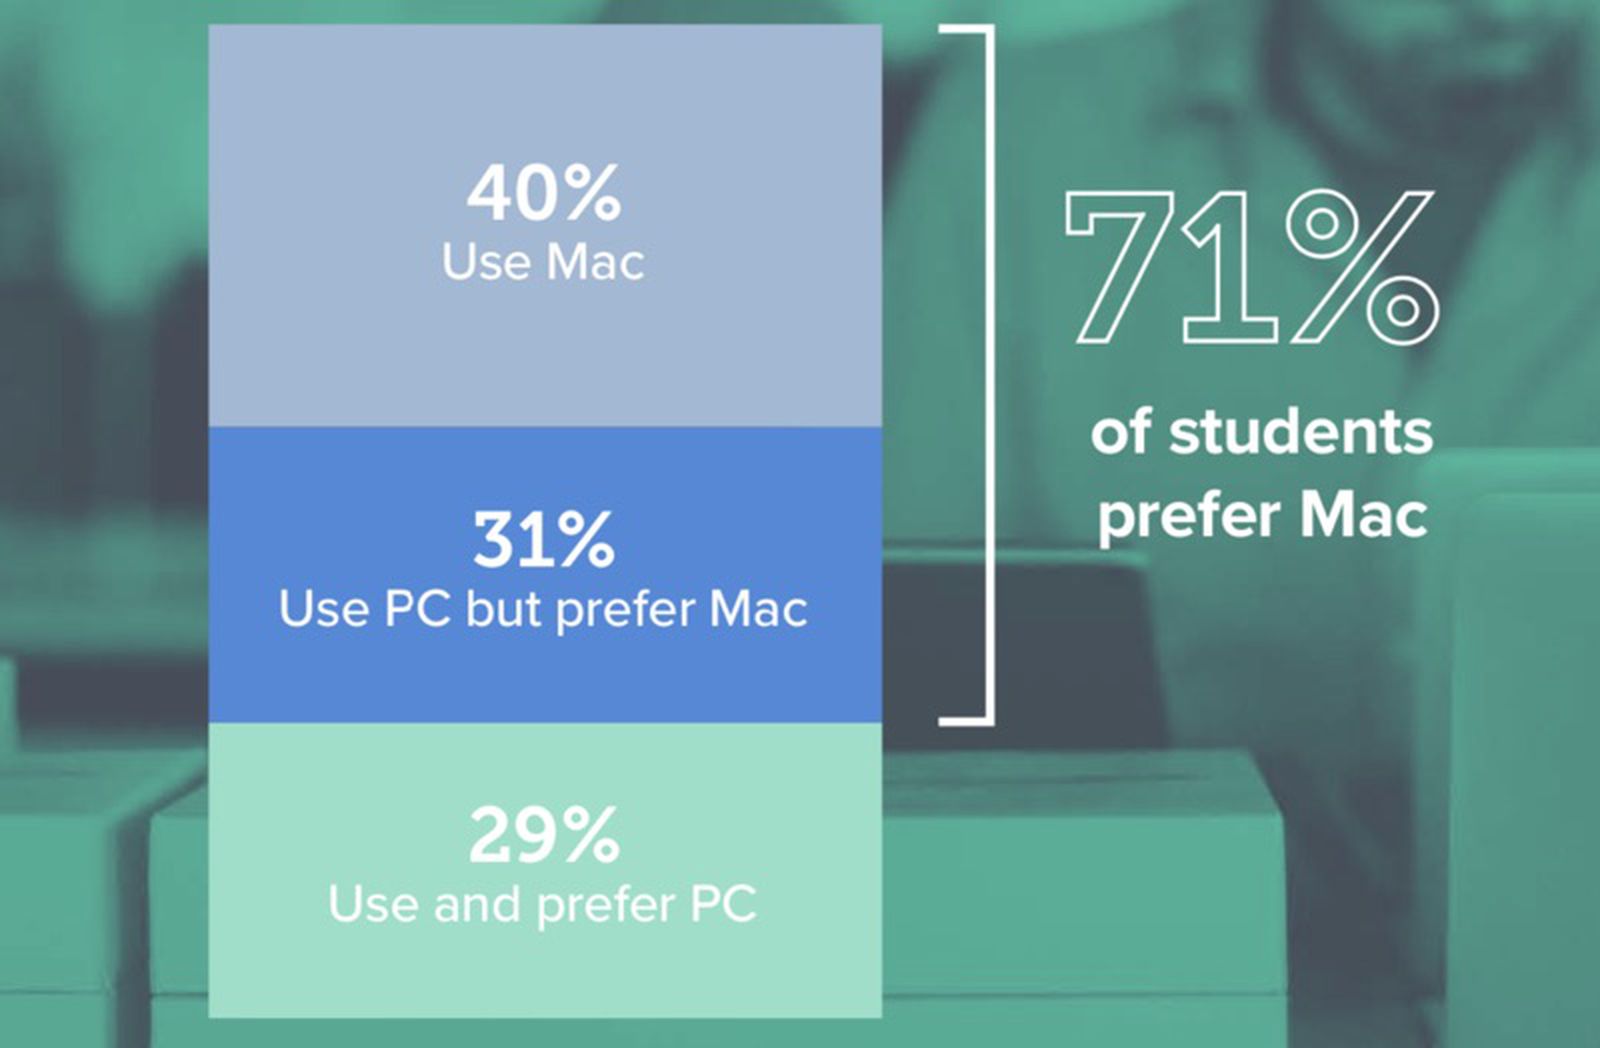 Why are Macs preferred?